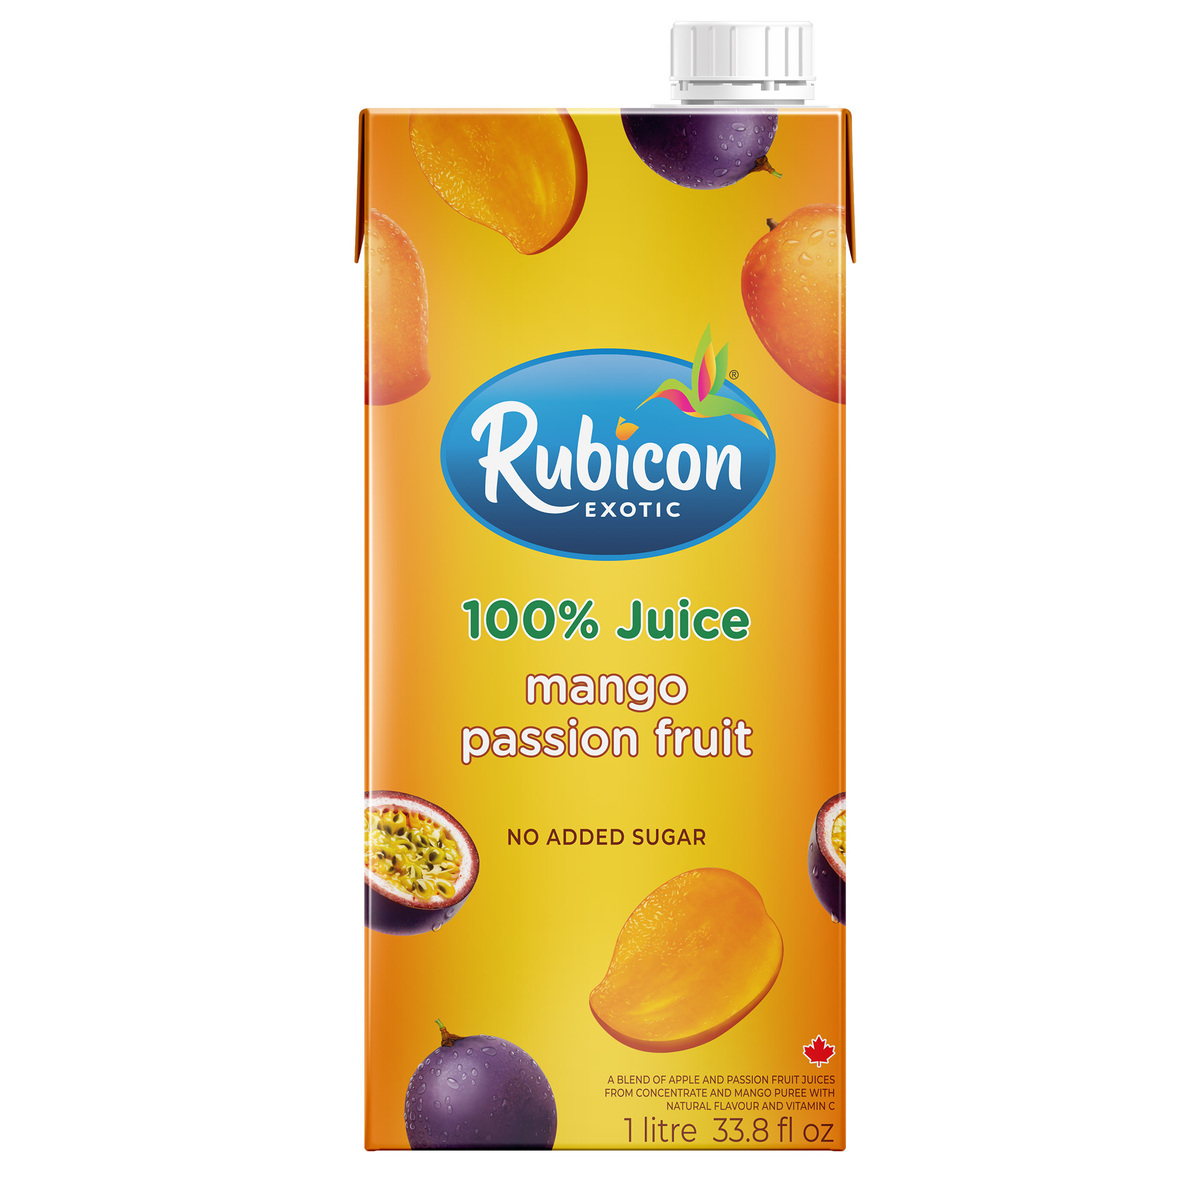 Rubicon Exotic No Added Sugar Mango Passion Fruit Juice 1 Litre